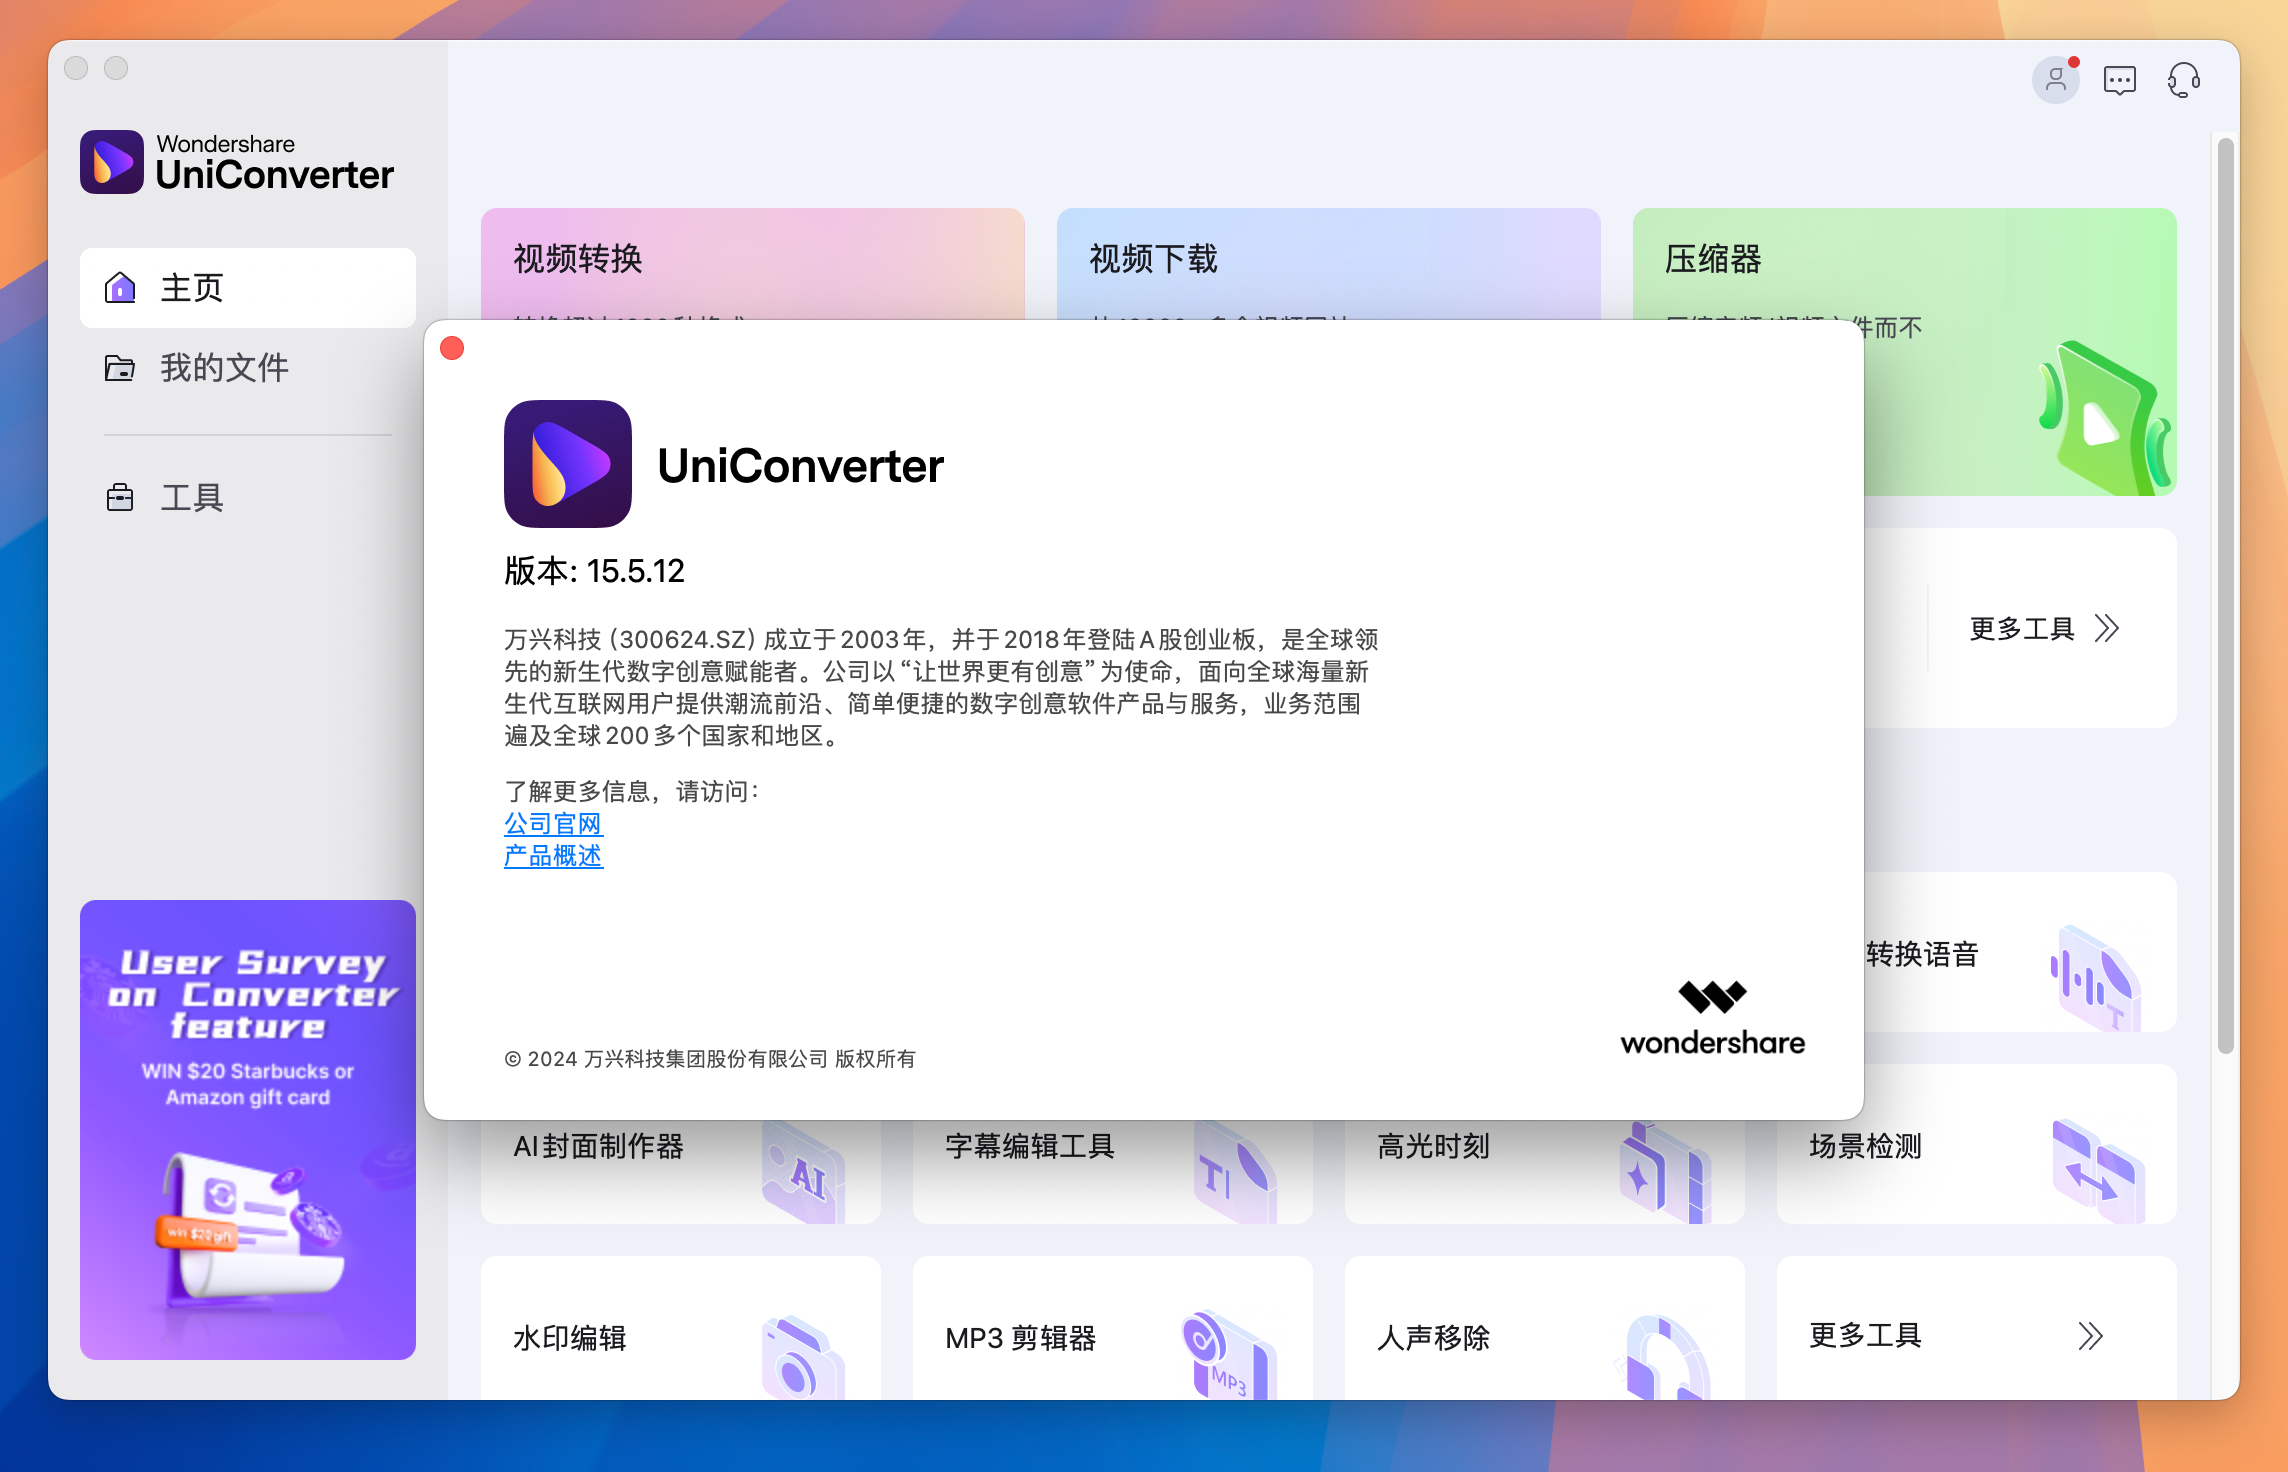 Wondershare UniConverter v15.5.12.211 万兴优转视频编辑处理工具 中文激活版-1